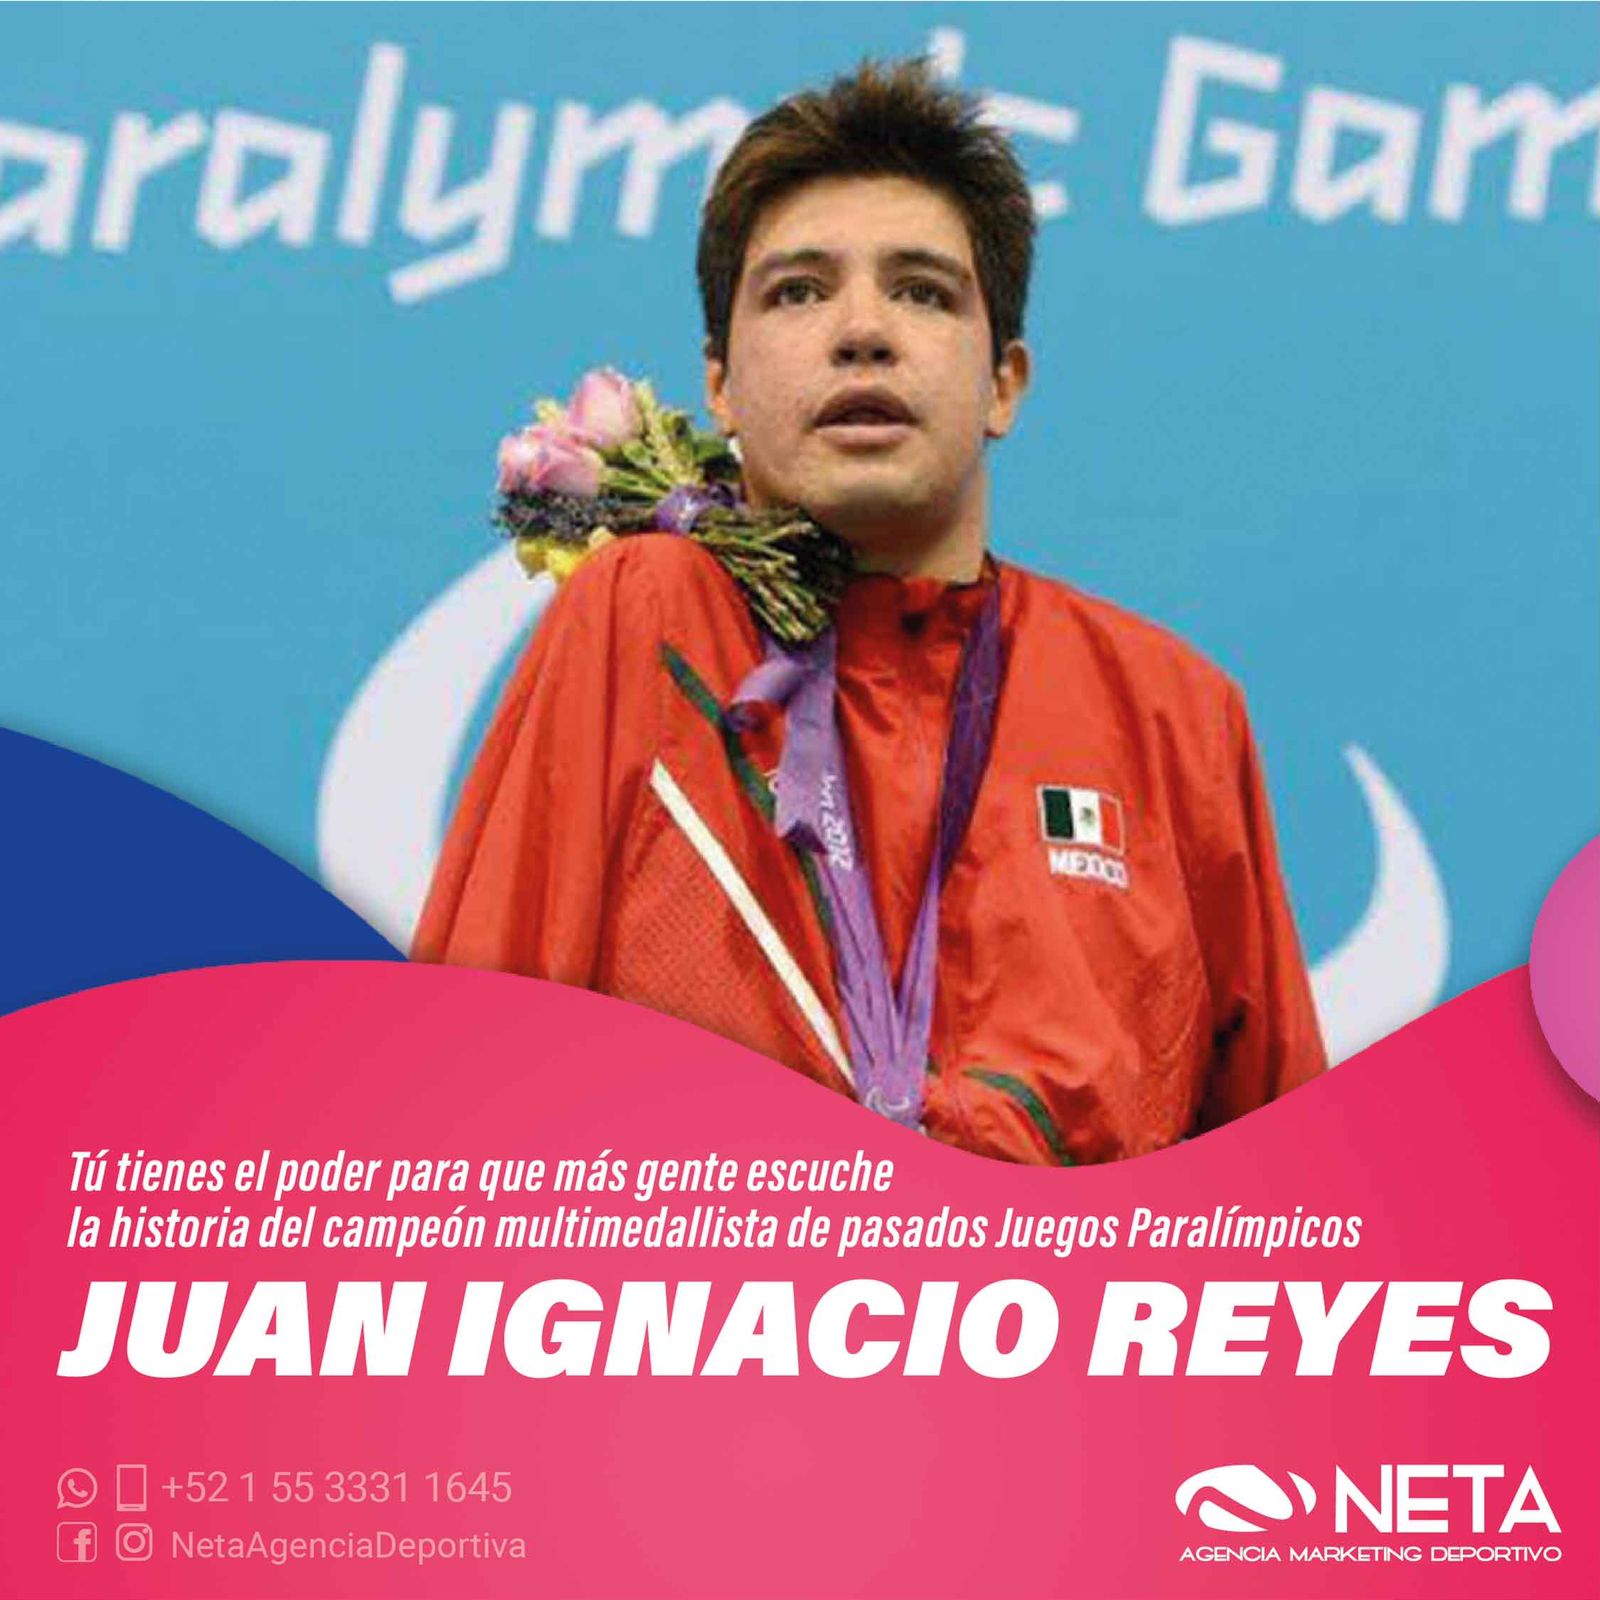 Juan Ignacio Reyes